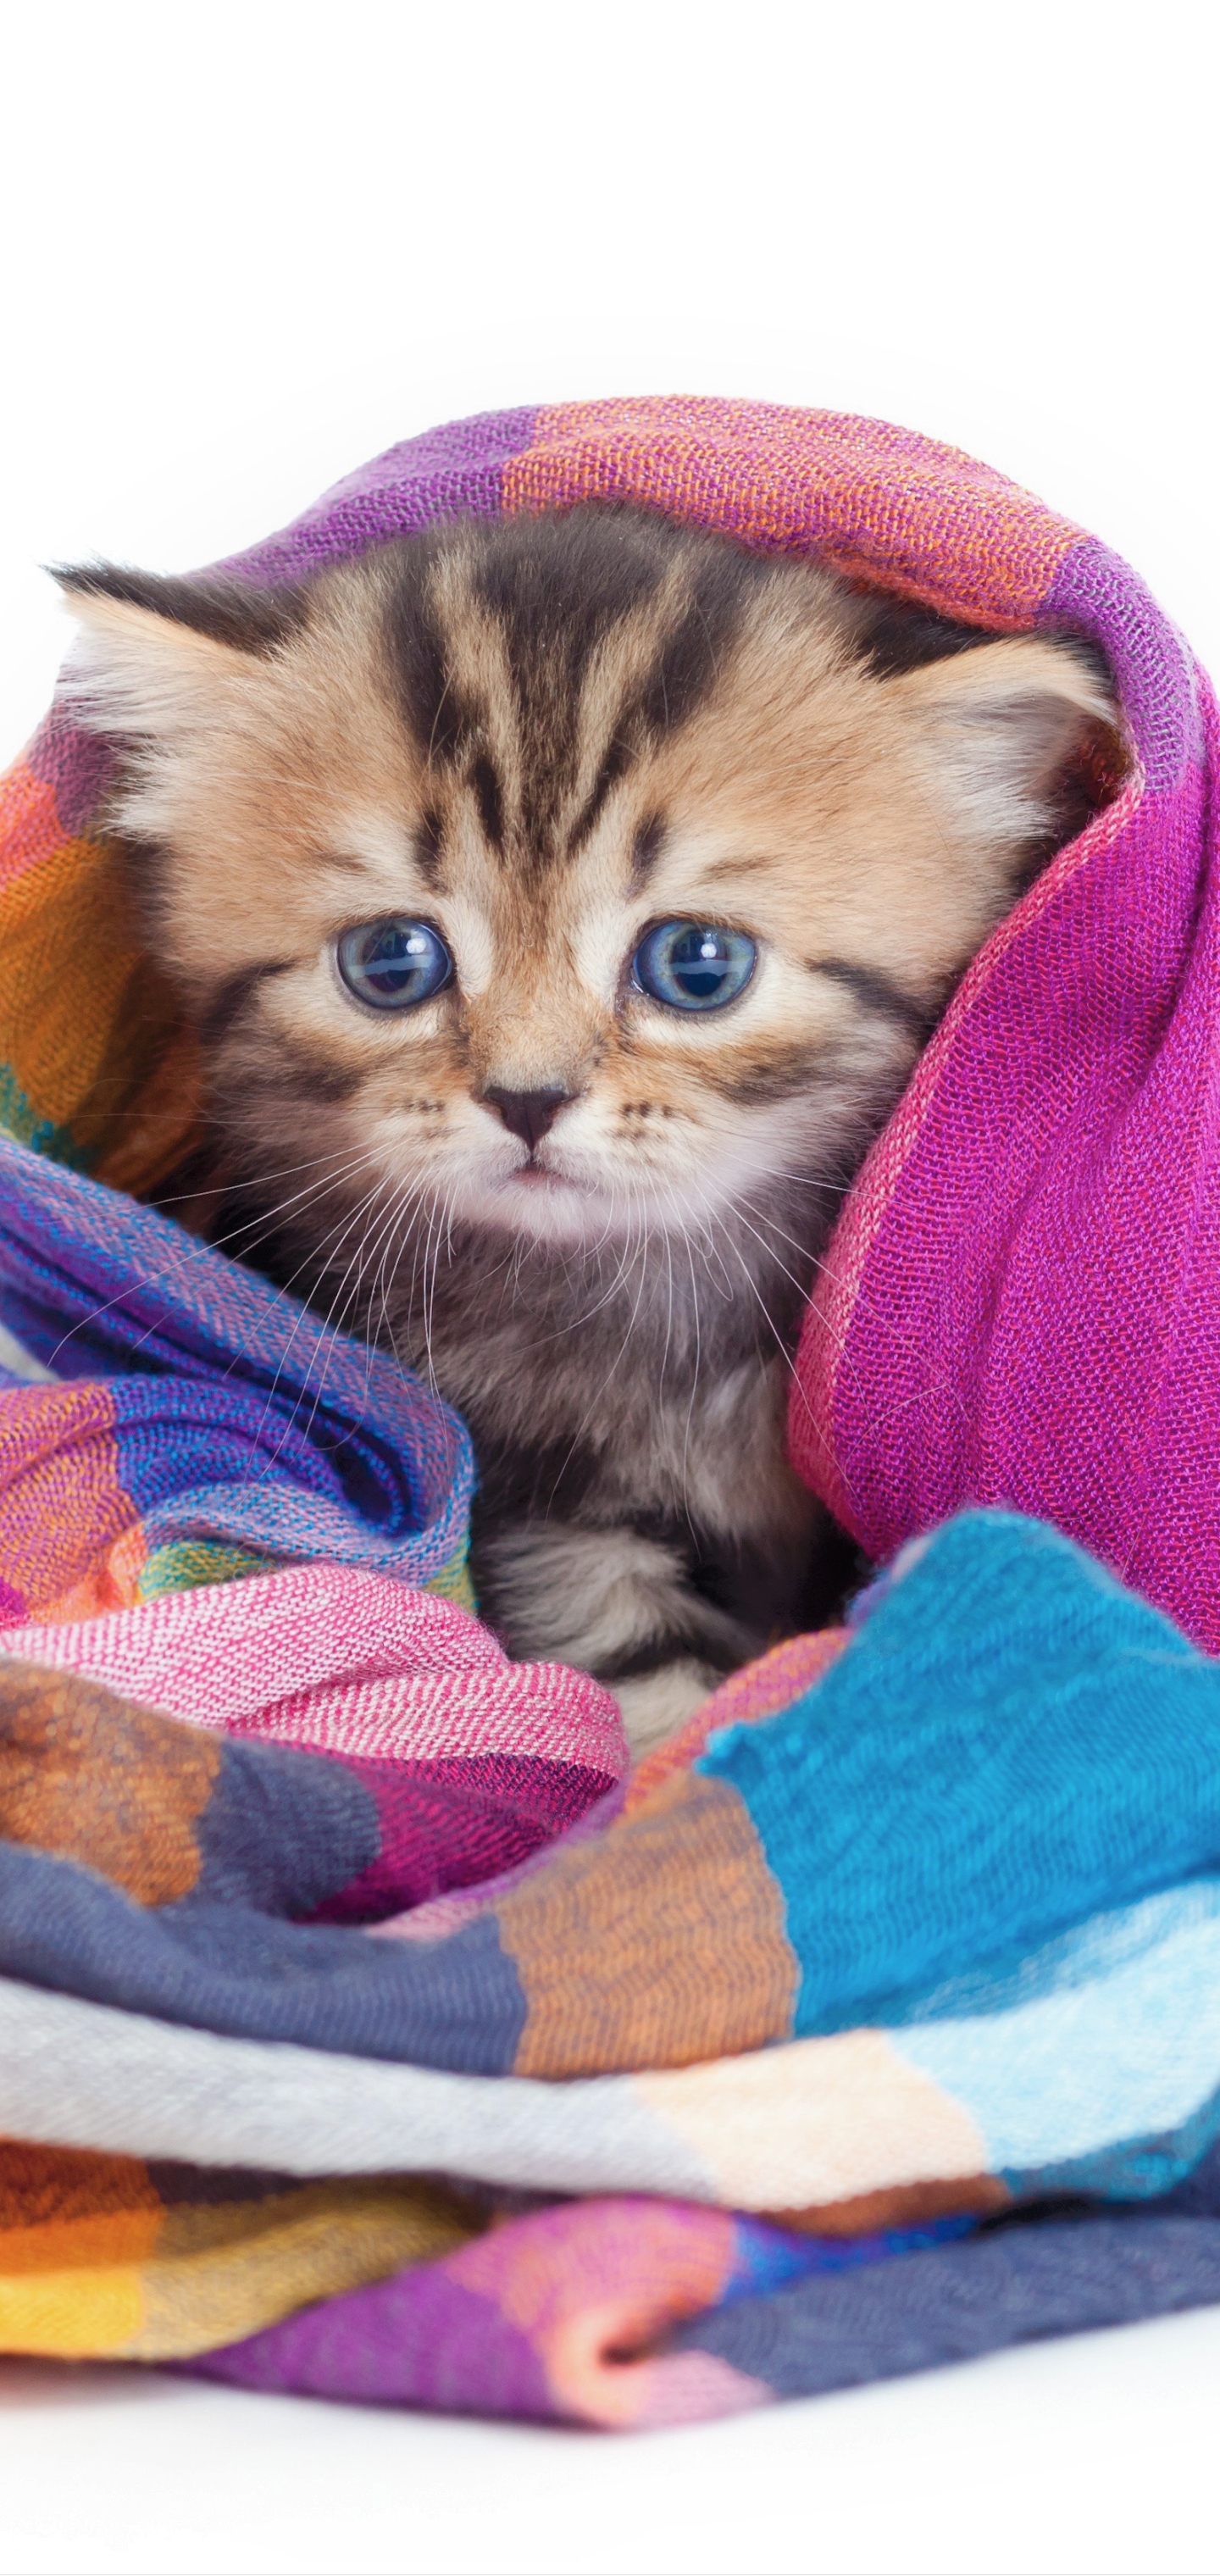 animal, cat, baby animal, cute, kitten, blanket, cats